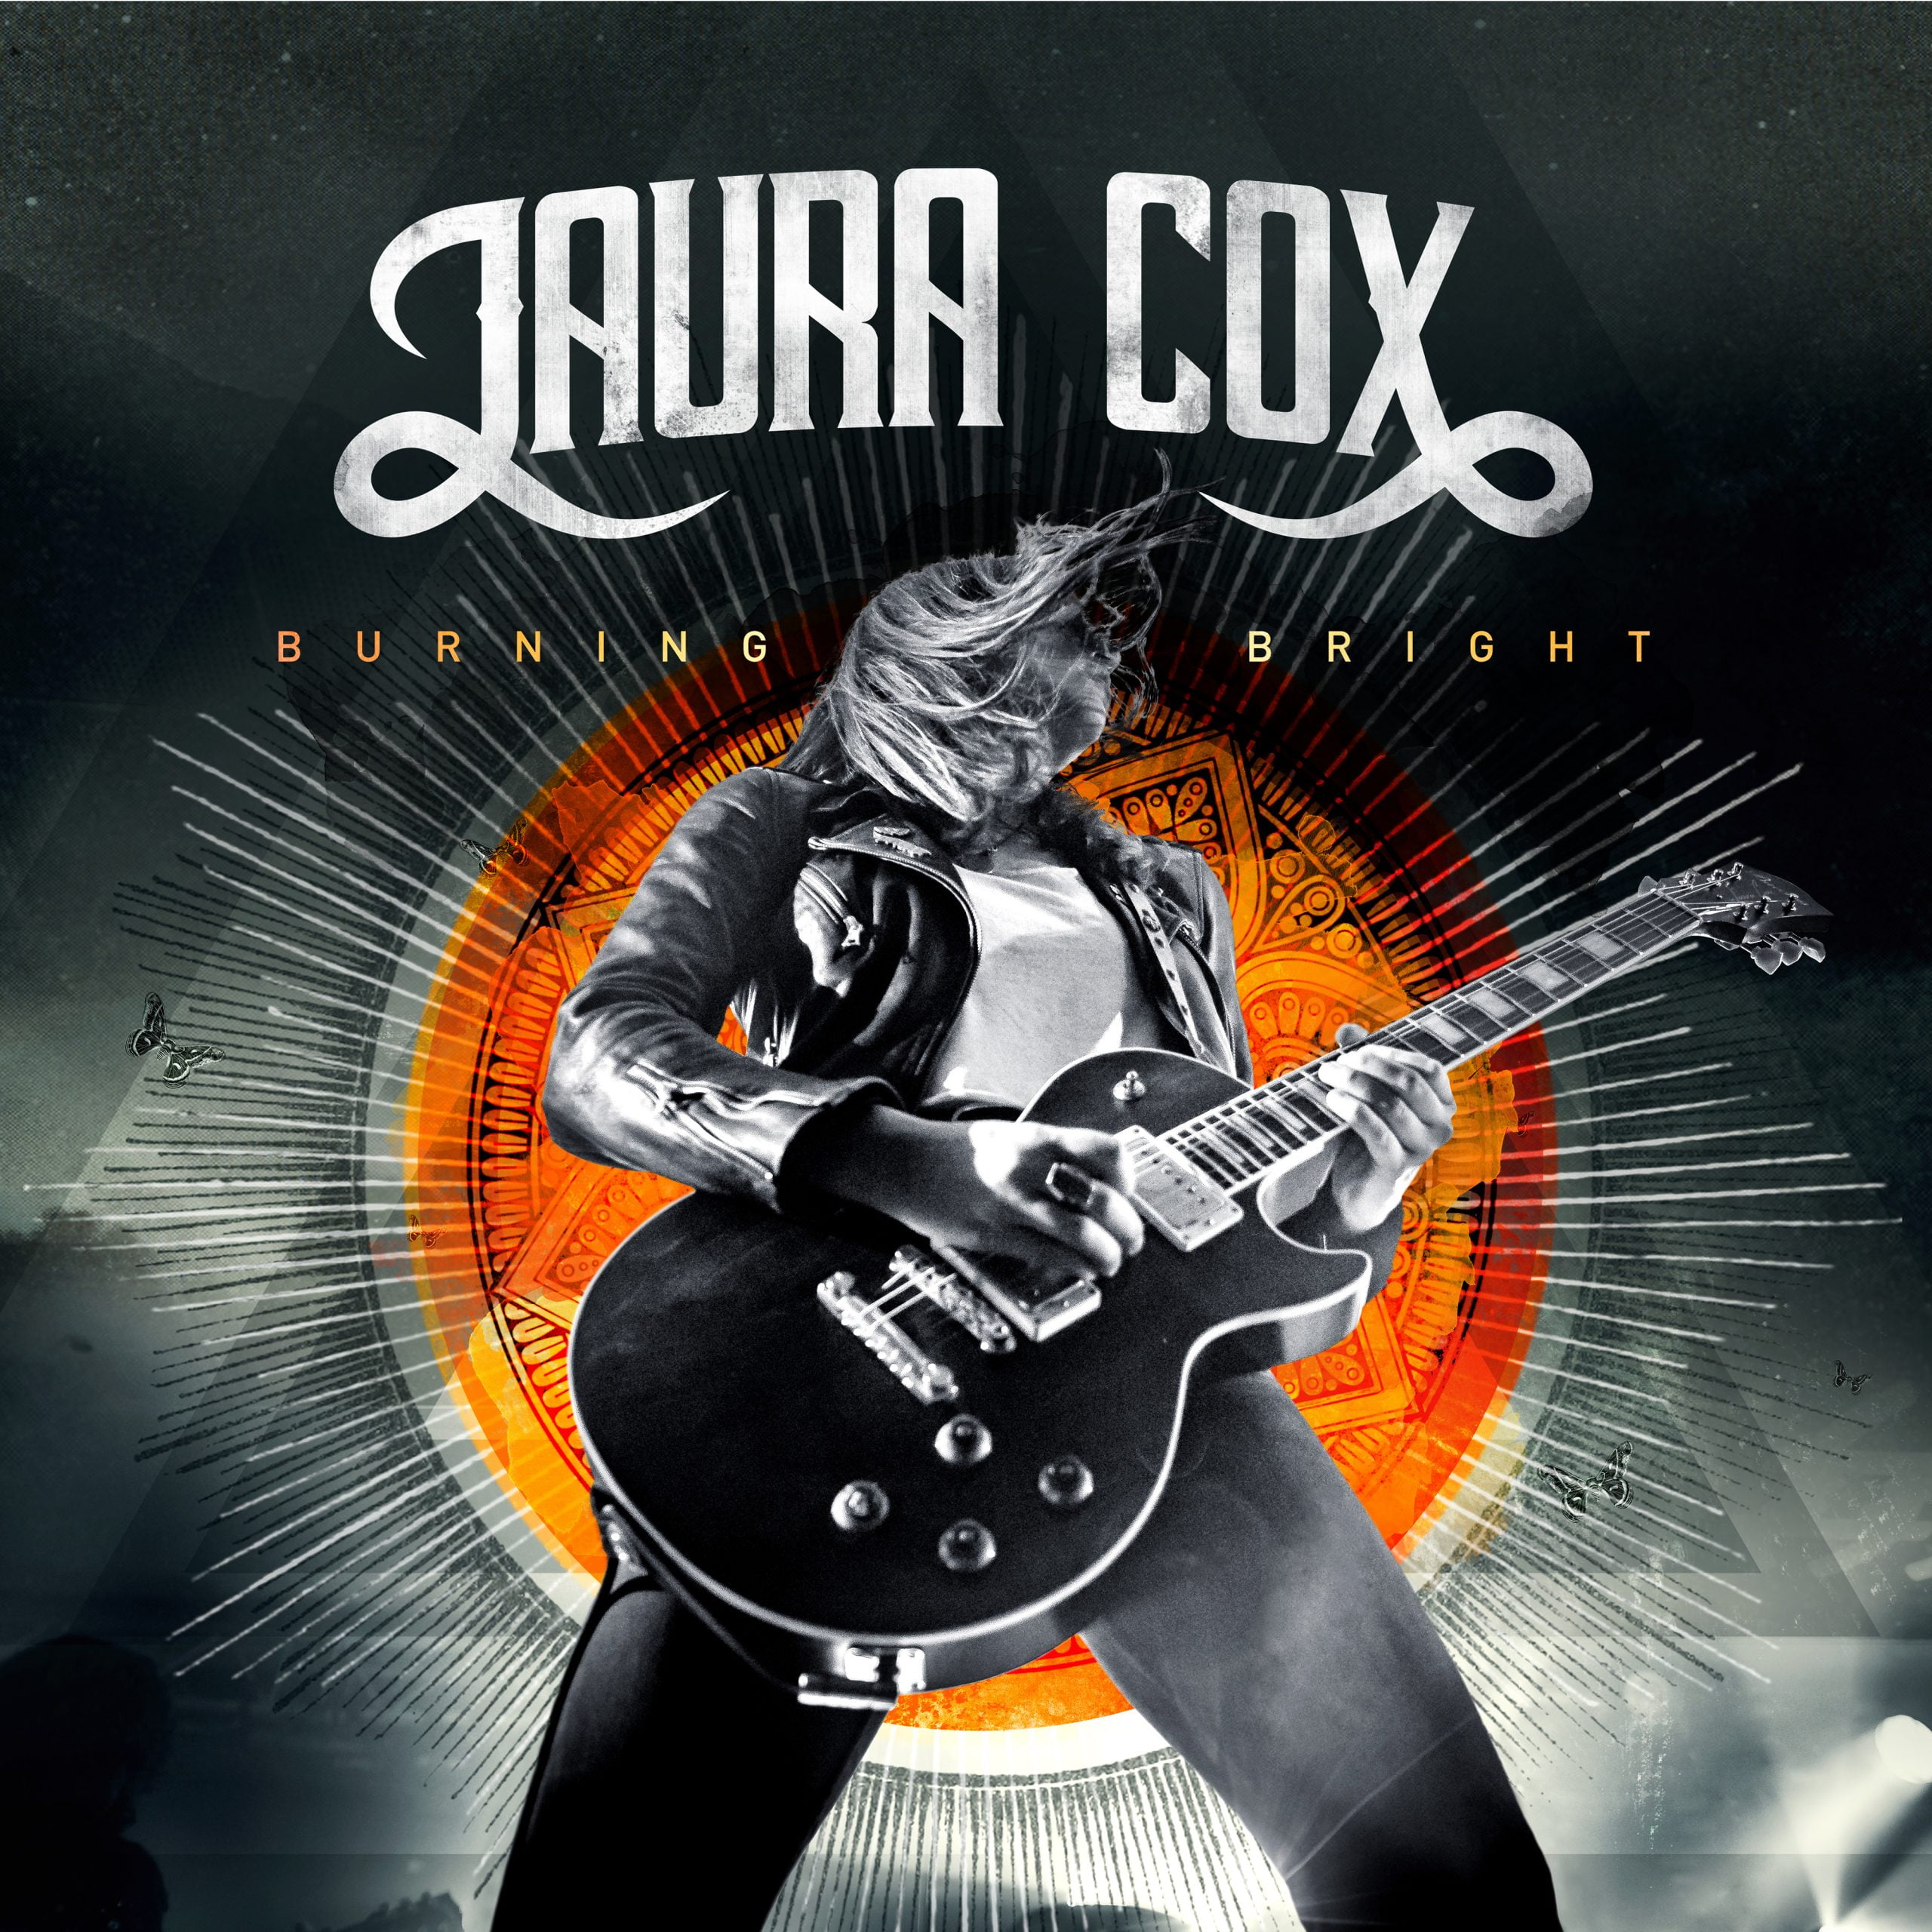 Brasov Jazz & Blues Festival | LAURA COX. She will... Rock you!